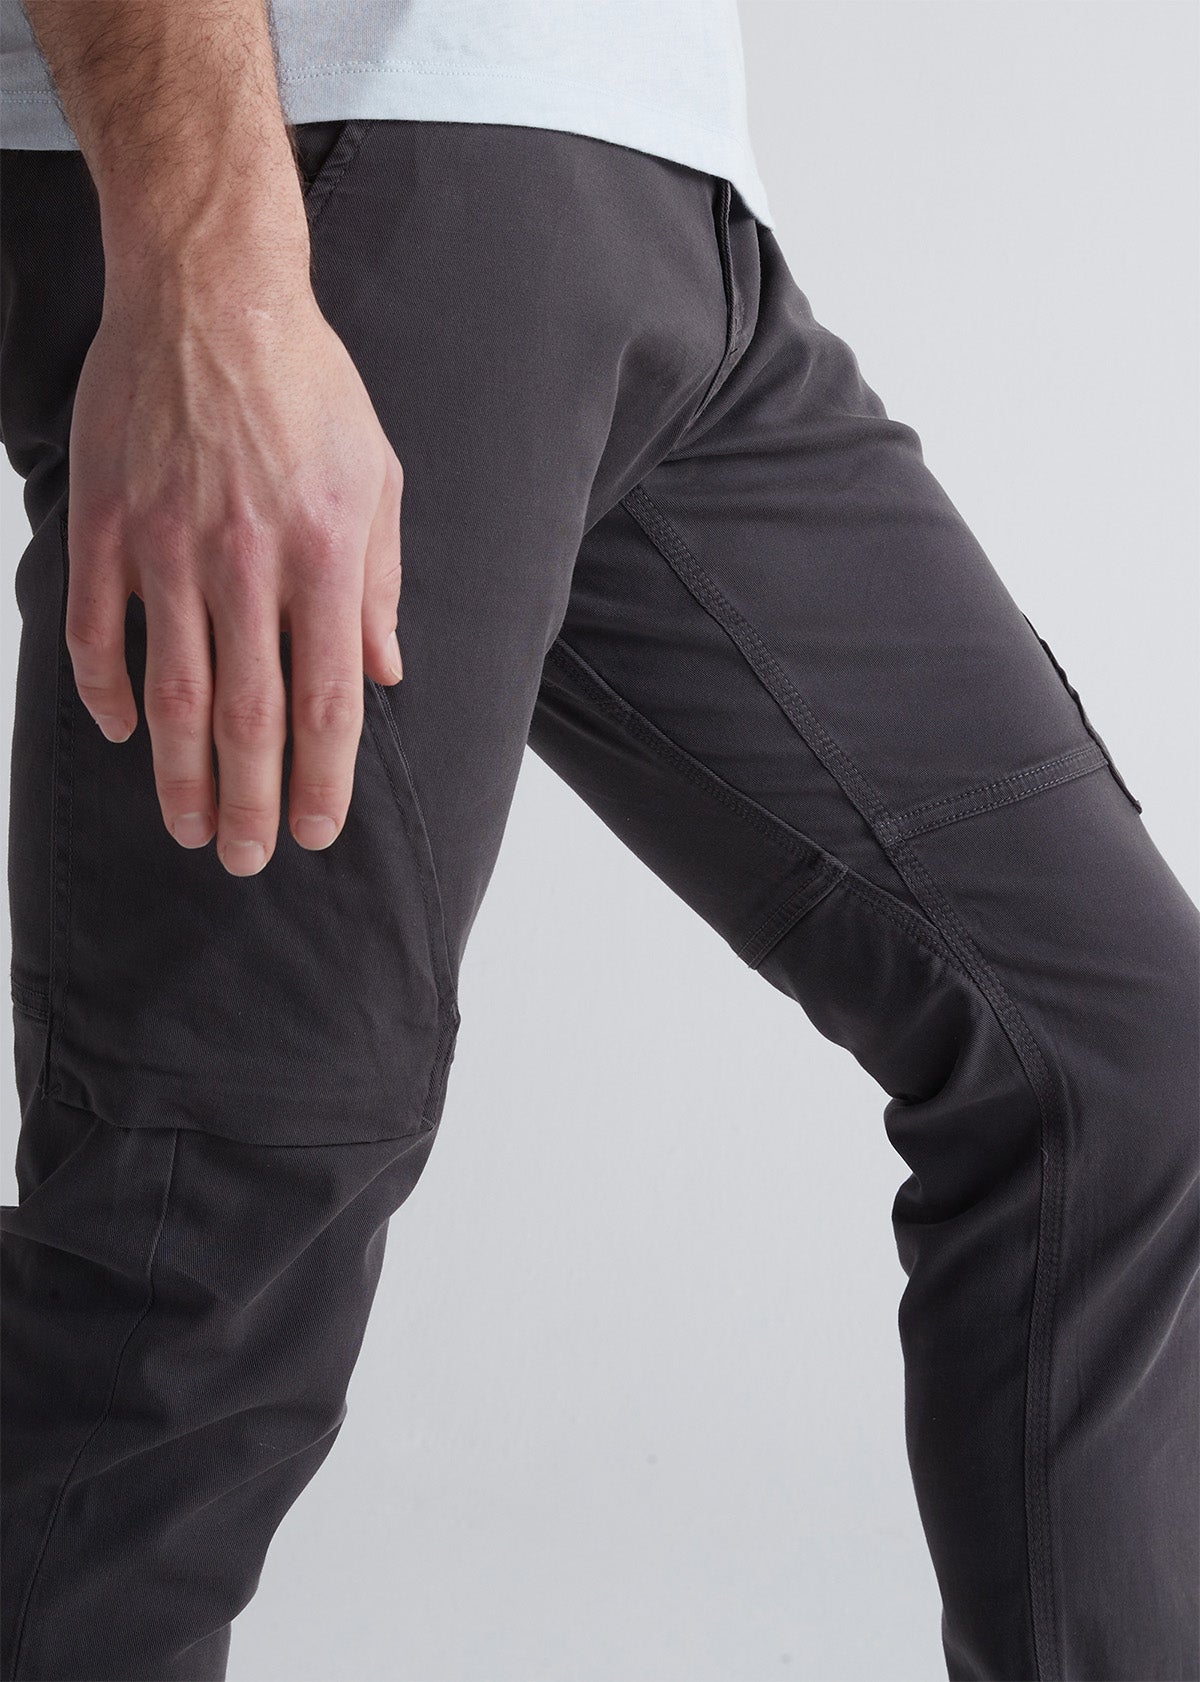 Workforce Mens Thermal Trousers Large Grey